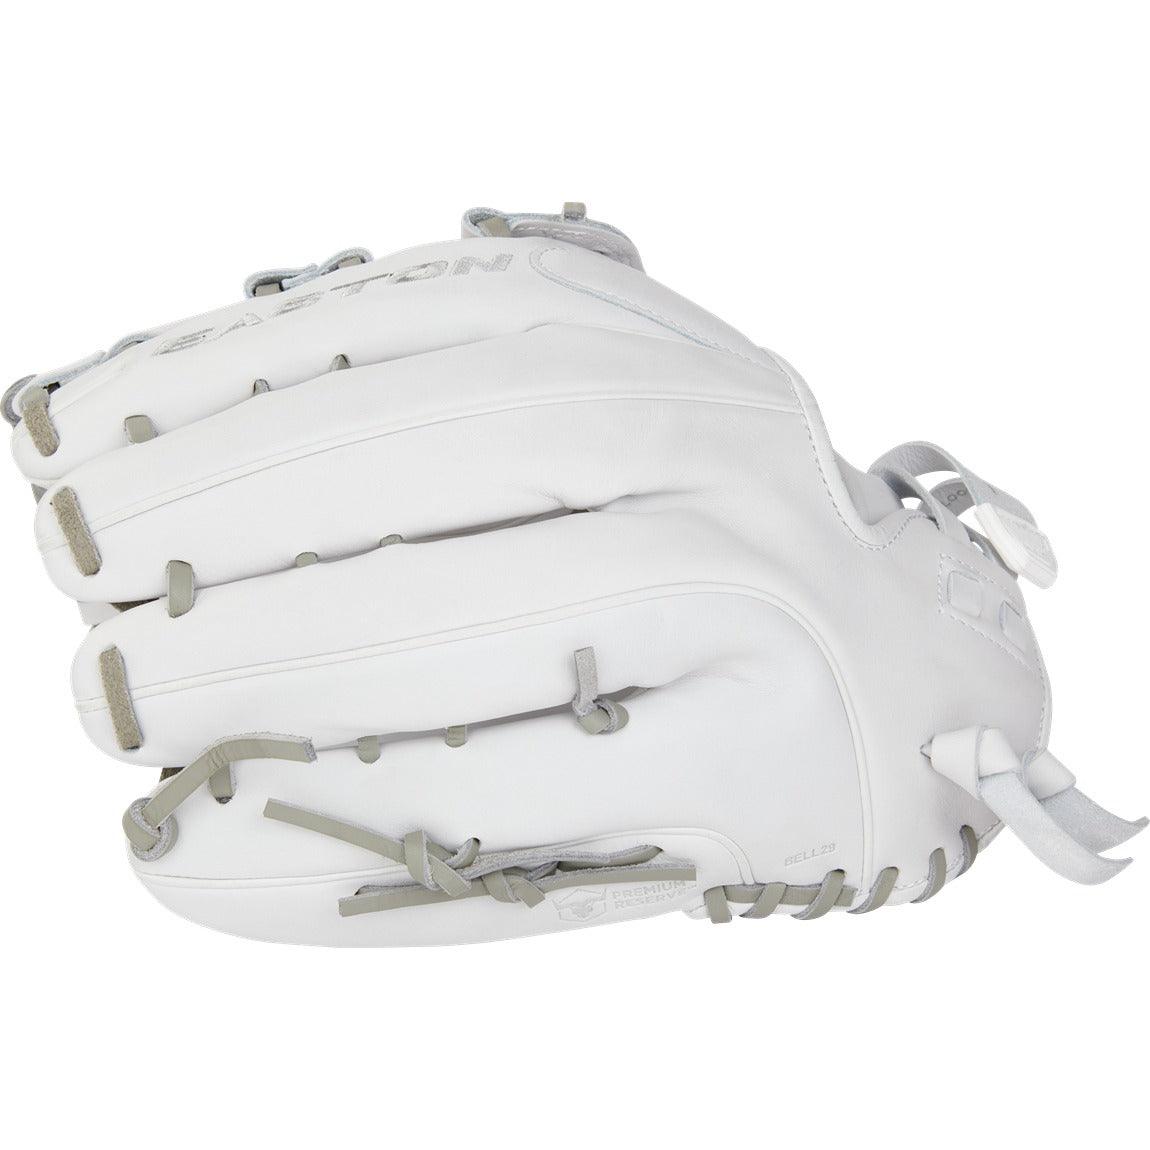 2024 Easton Pro Collection 13" Softball Glove